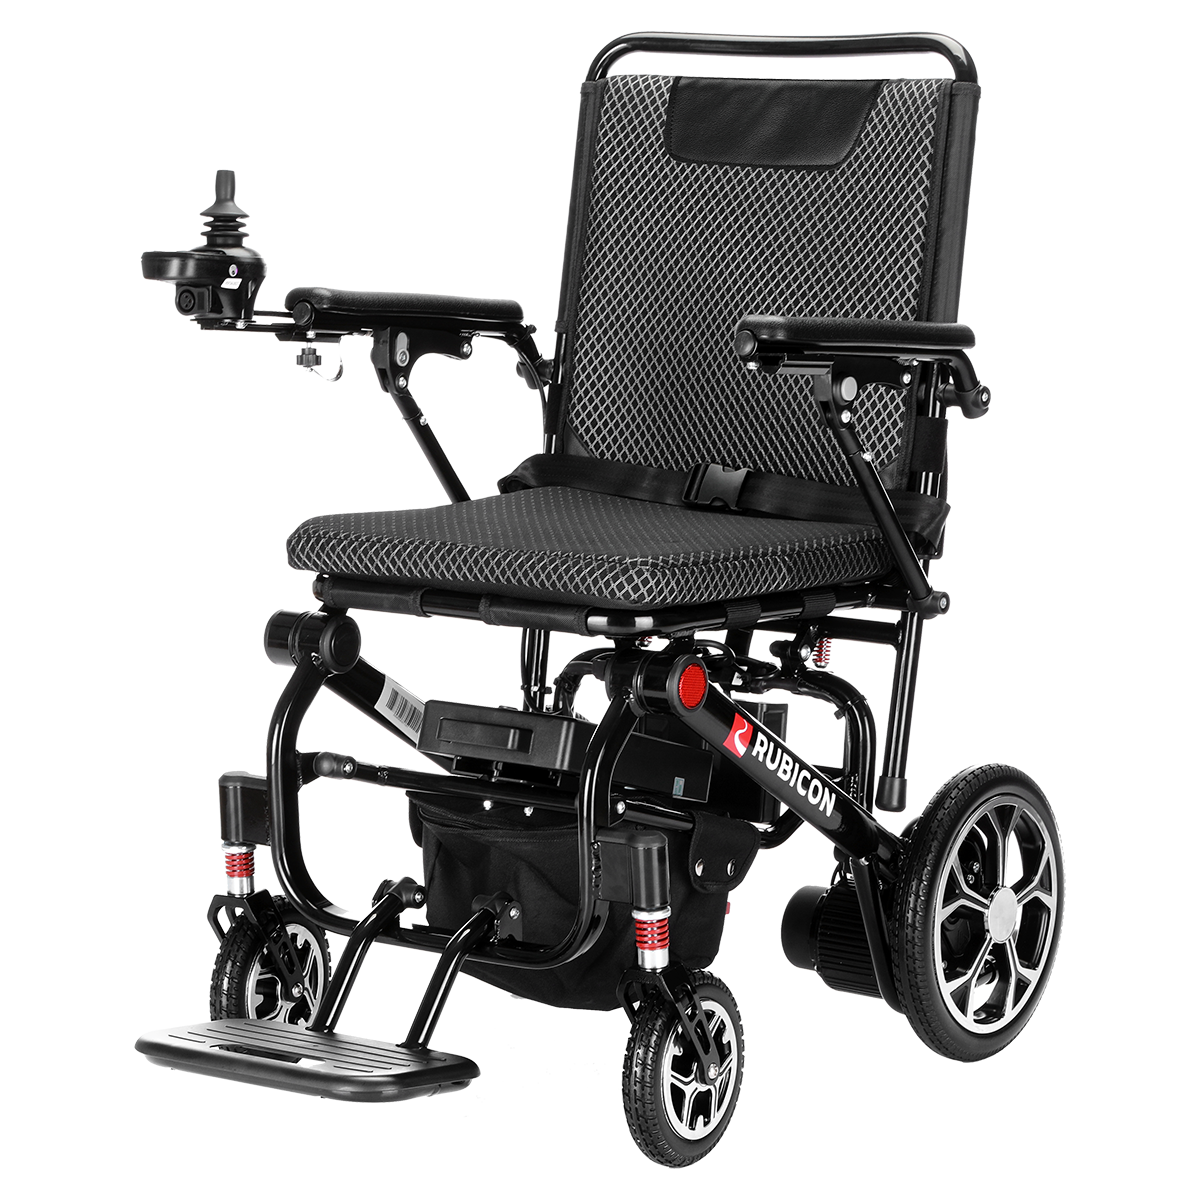 Klano KL60 - Super Lightweight Electric Wheelchair